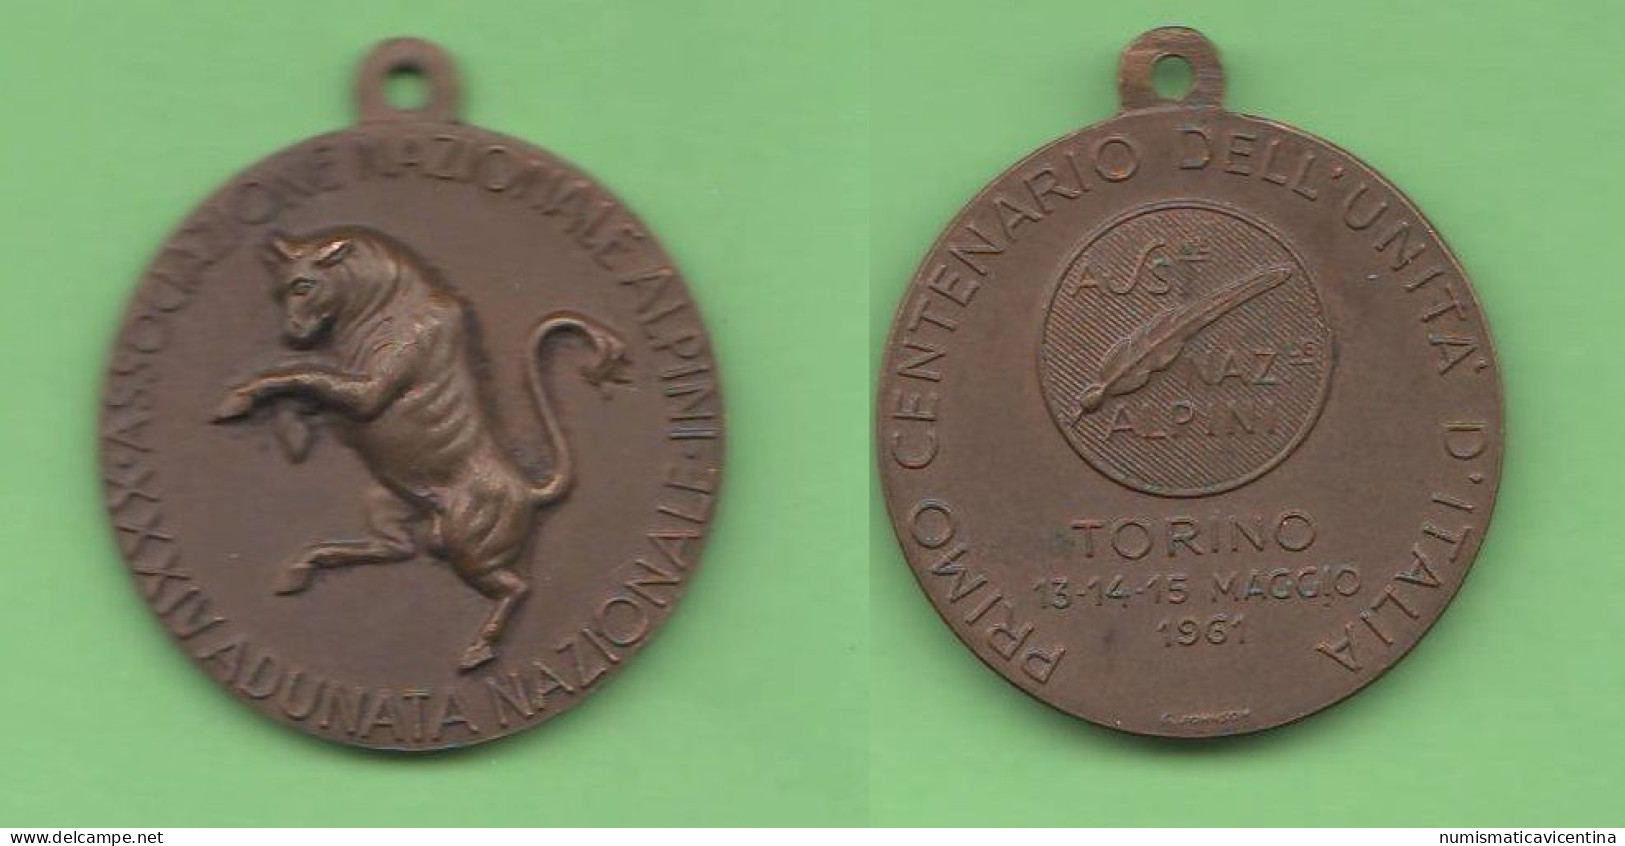 Torino Medaglia Adunata Nazionale Alpini 1961 ANA Marcata Johnson - Italië